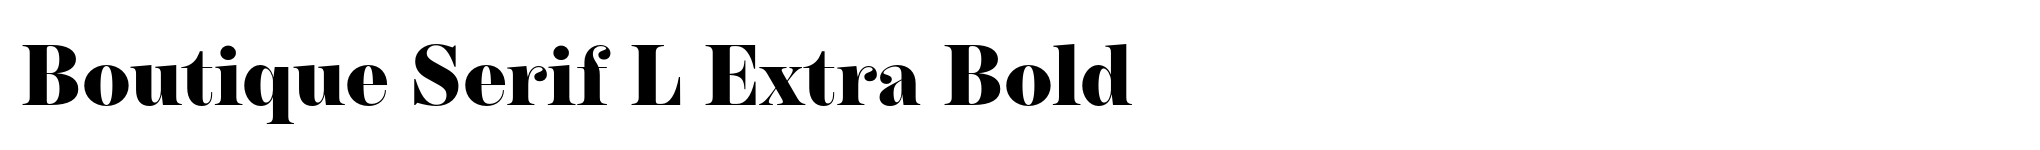 Boutique Serif L Extra Bold image